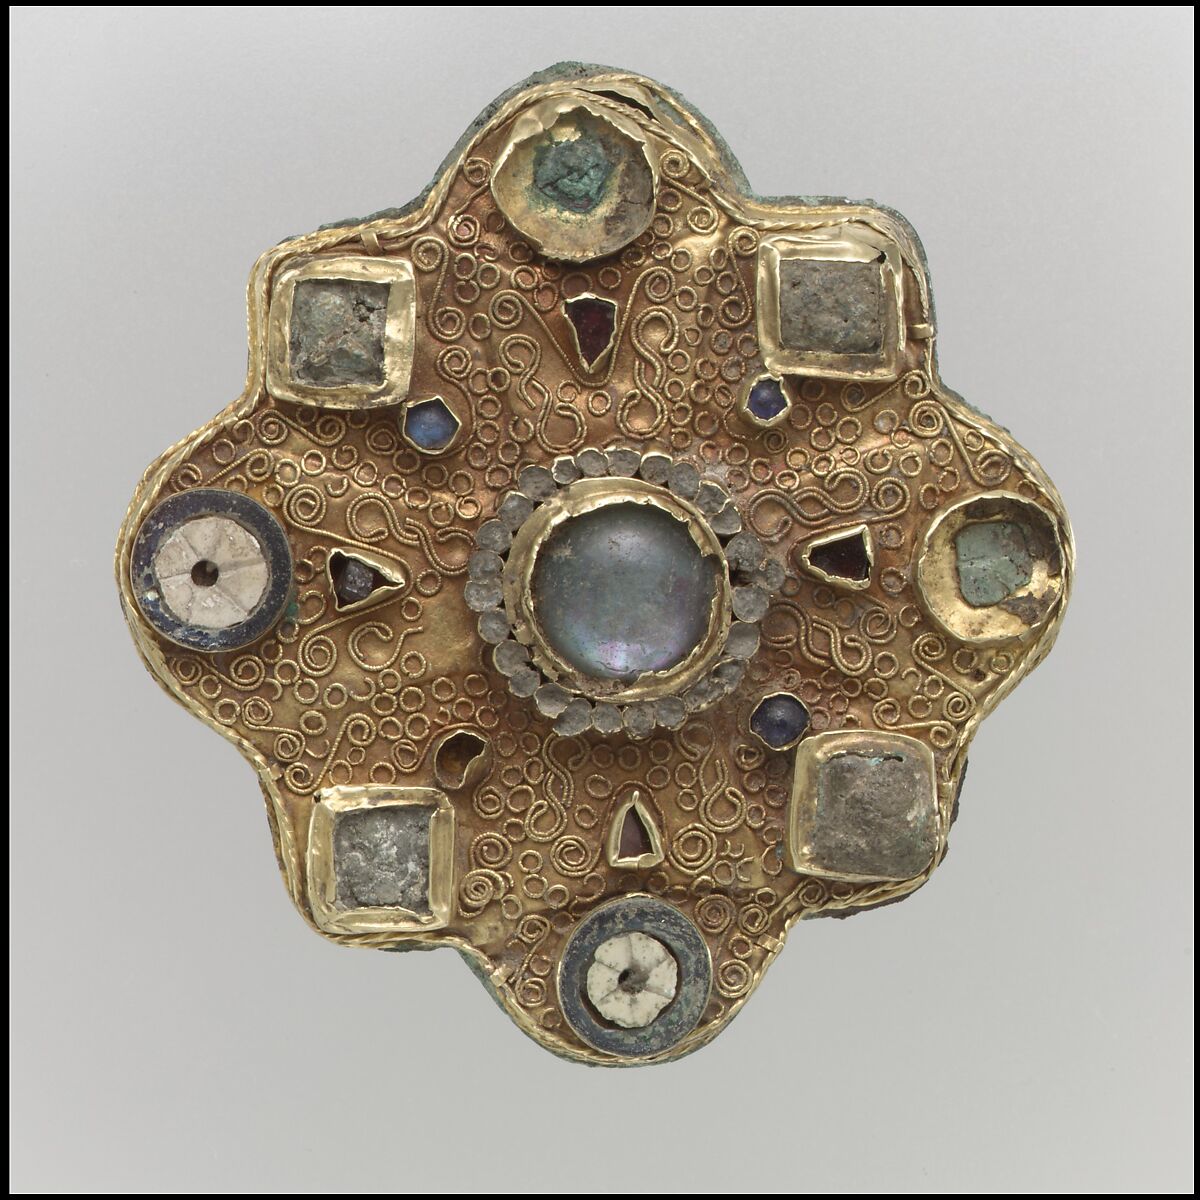 Disk Brooch, Gold sheet, filigree, moonstone/adularia, glass cabochons, garnets, mother-of-pearl, and moonstone, Frankish 